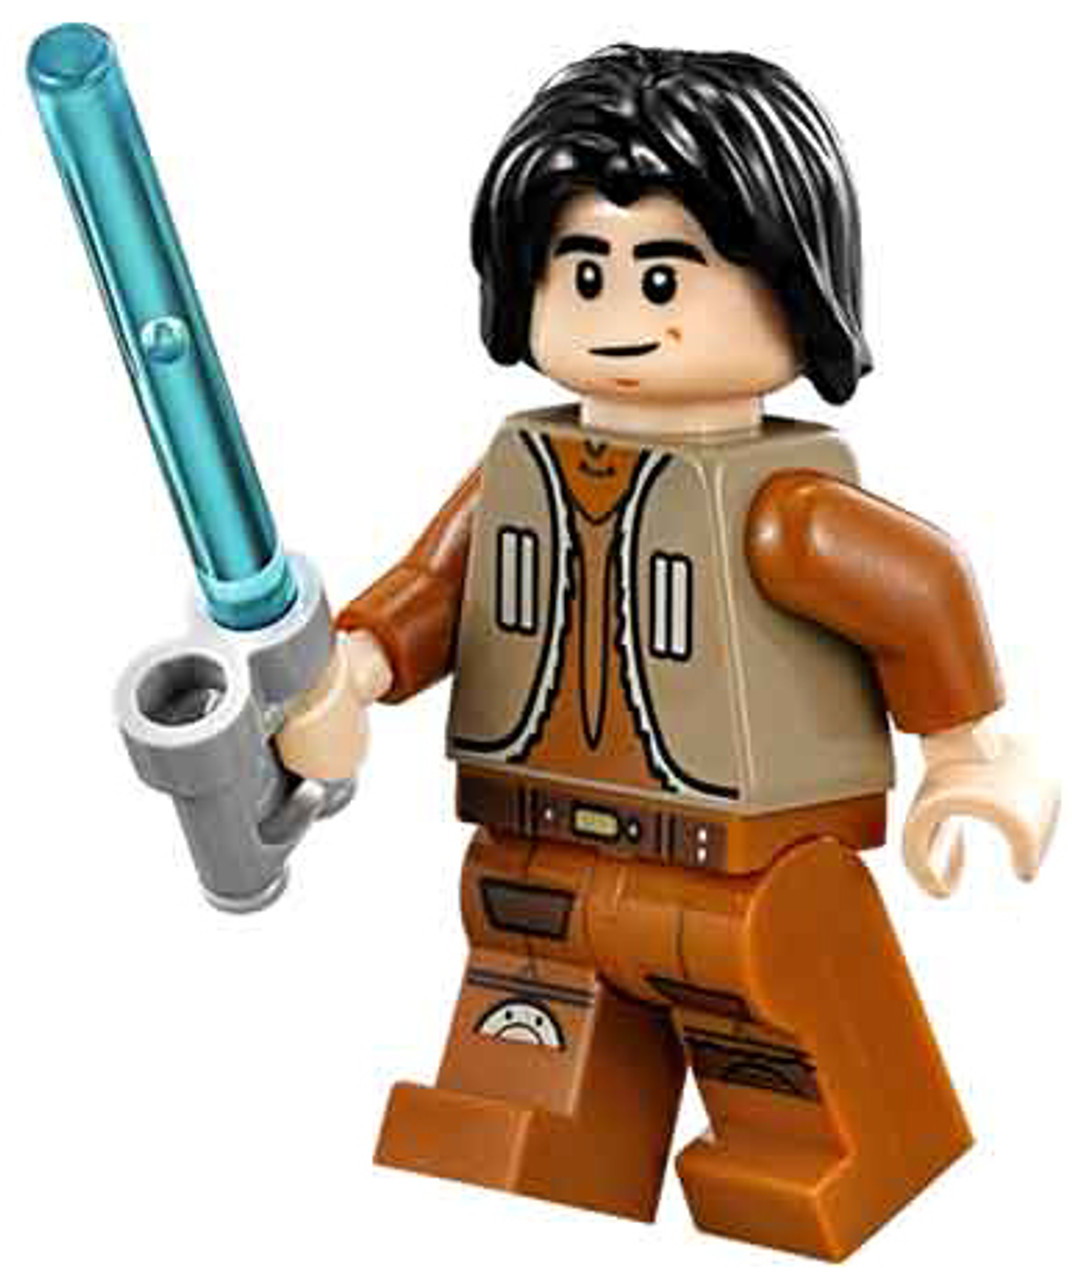 Lego Star Wars Rebels Loose Ezra Bridger Minifigure With Lightsaber 